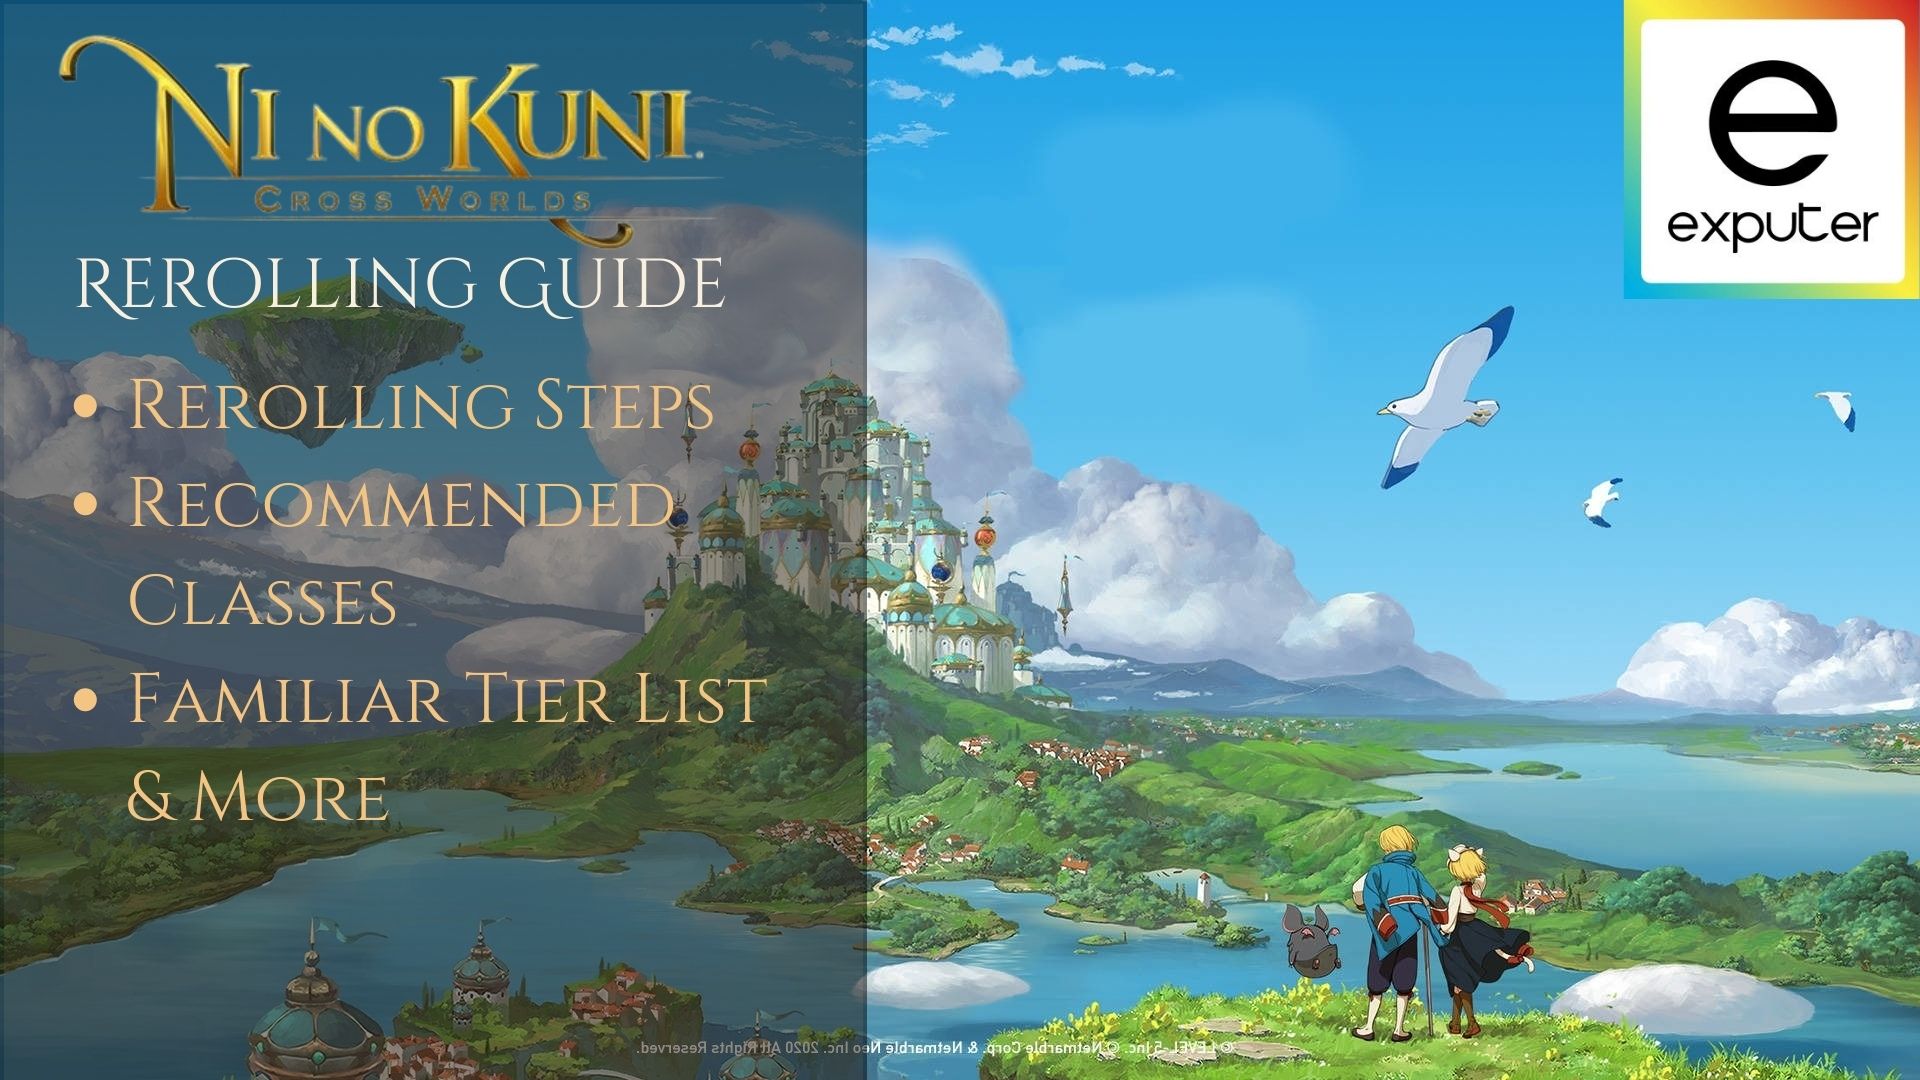 Reroll Guide For Ni No Kuni :Cross Worlds